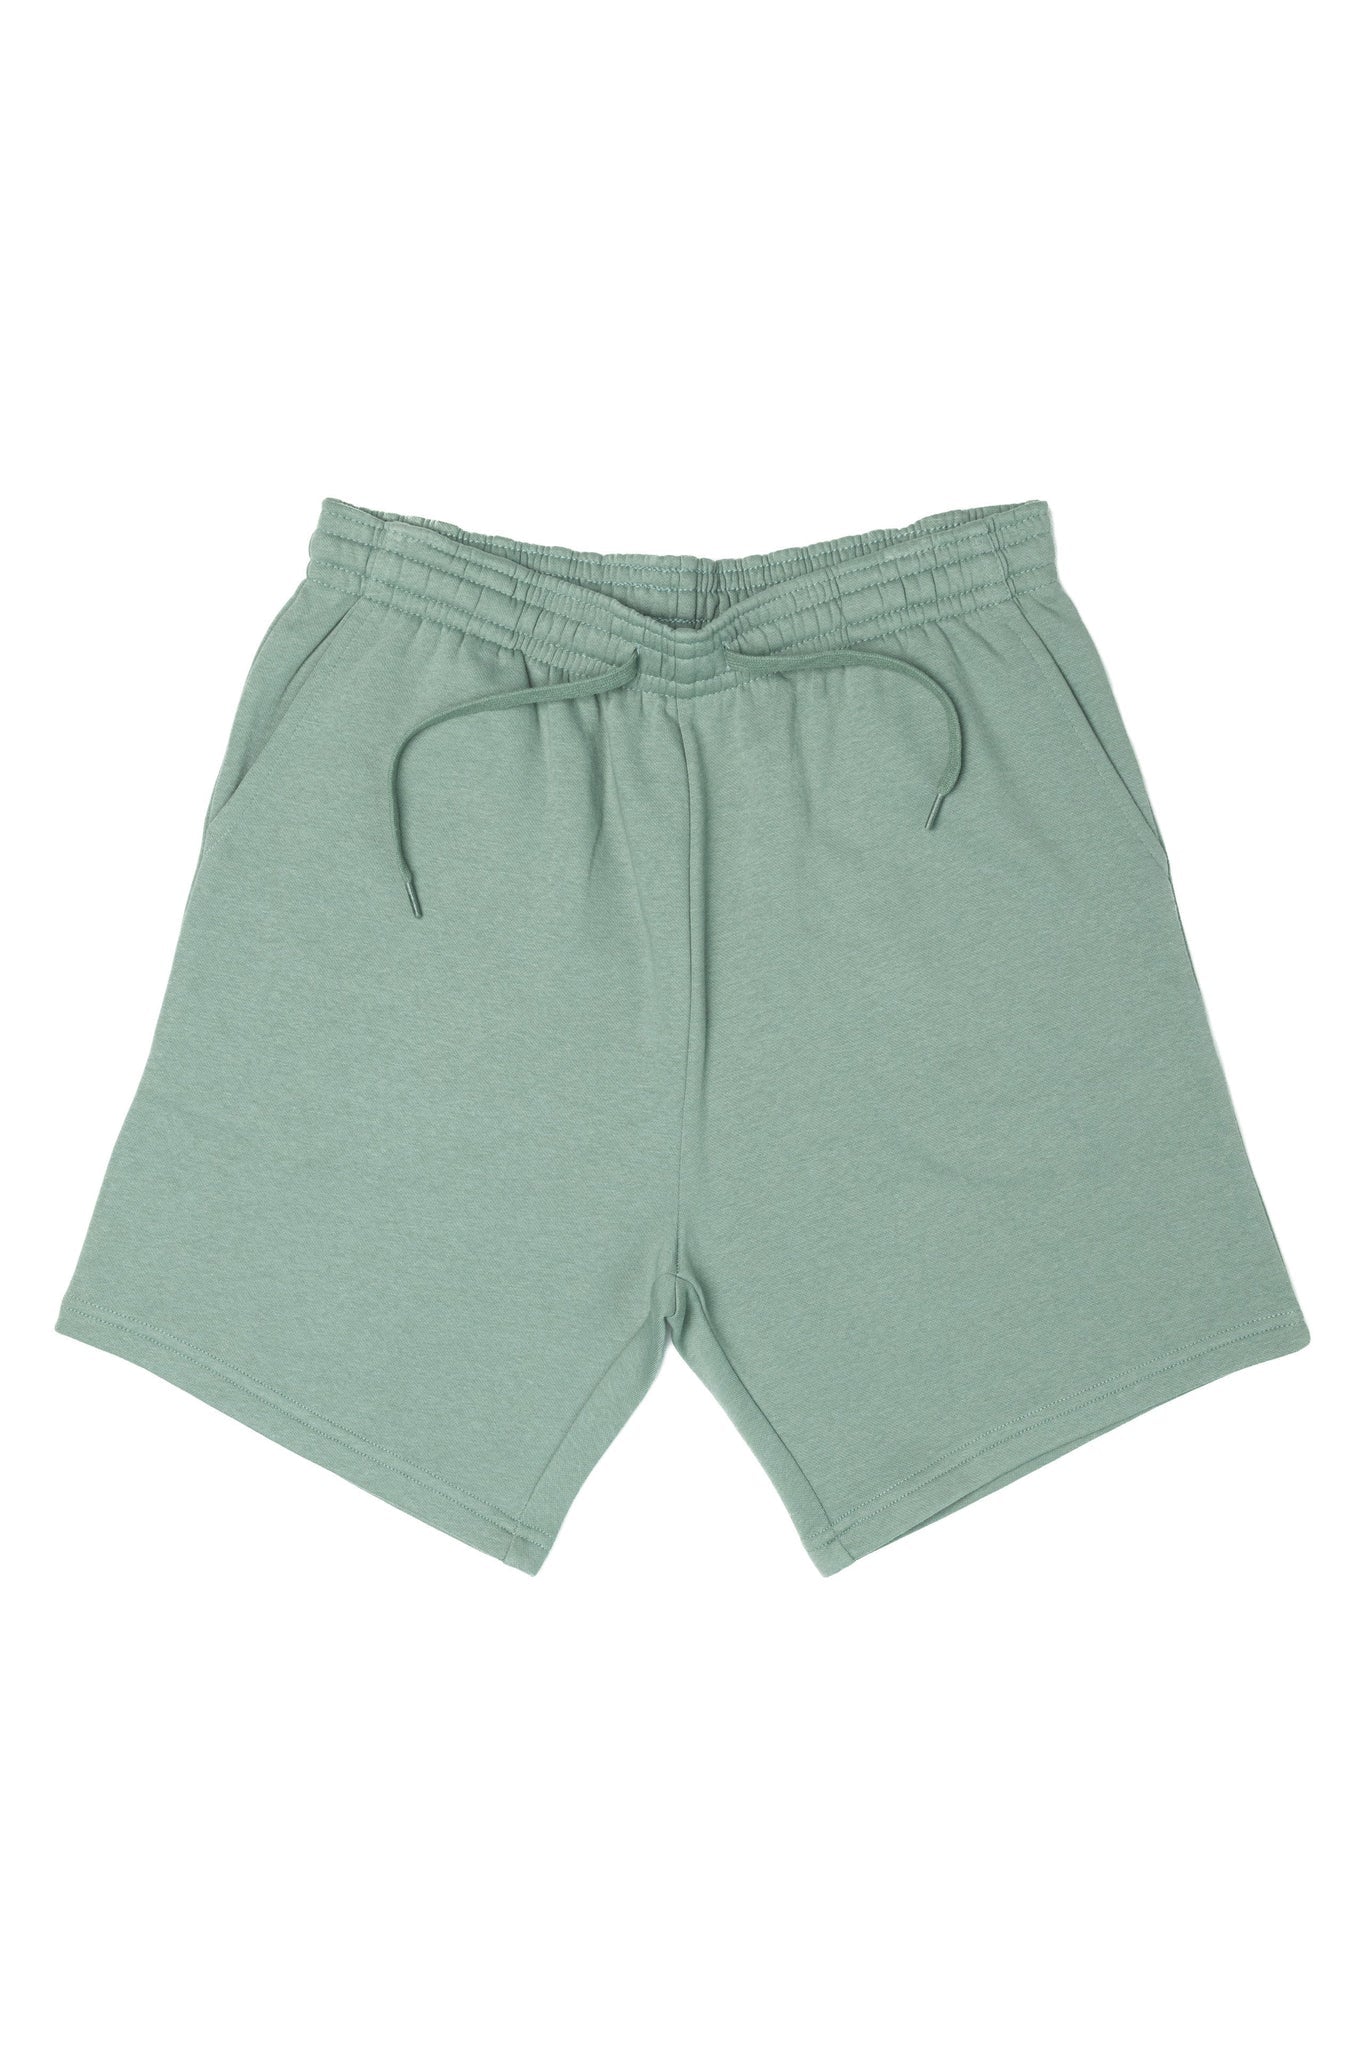 HERO - 6020 7’ Sweatshorts - Dusty Green Shorts